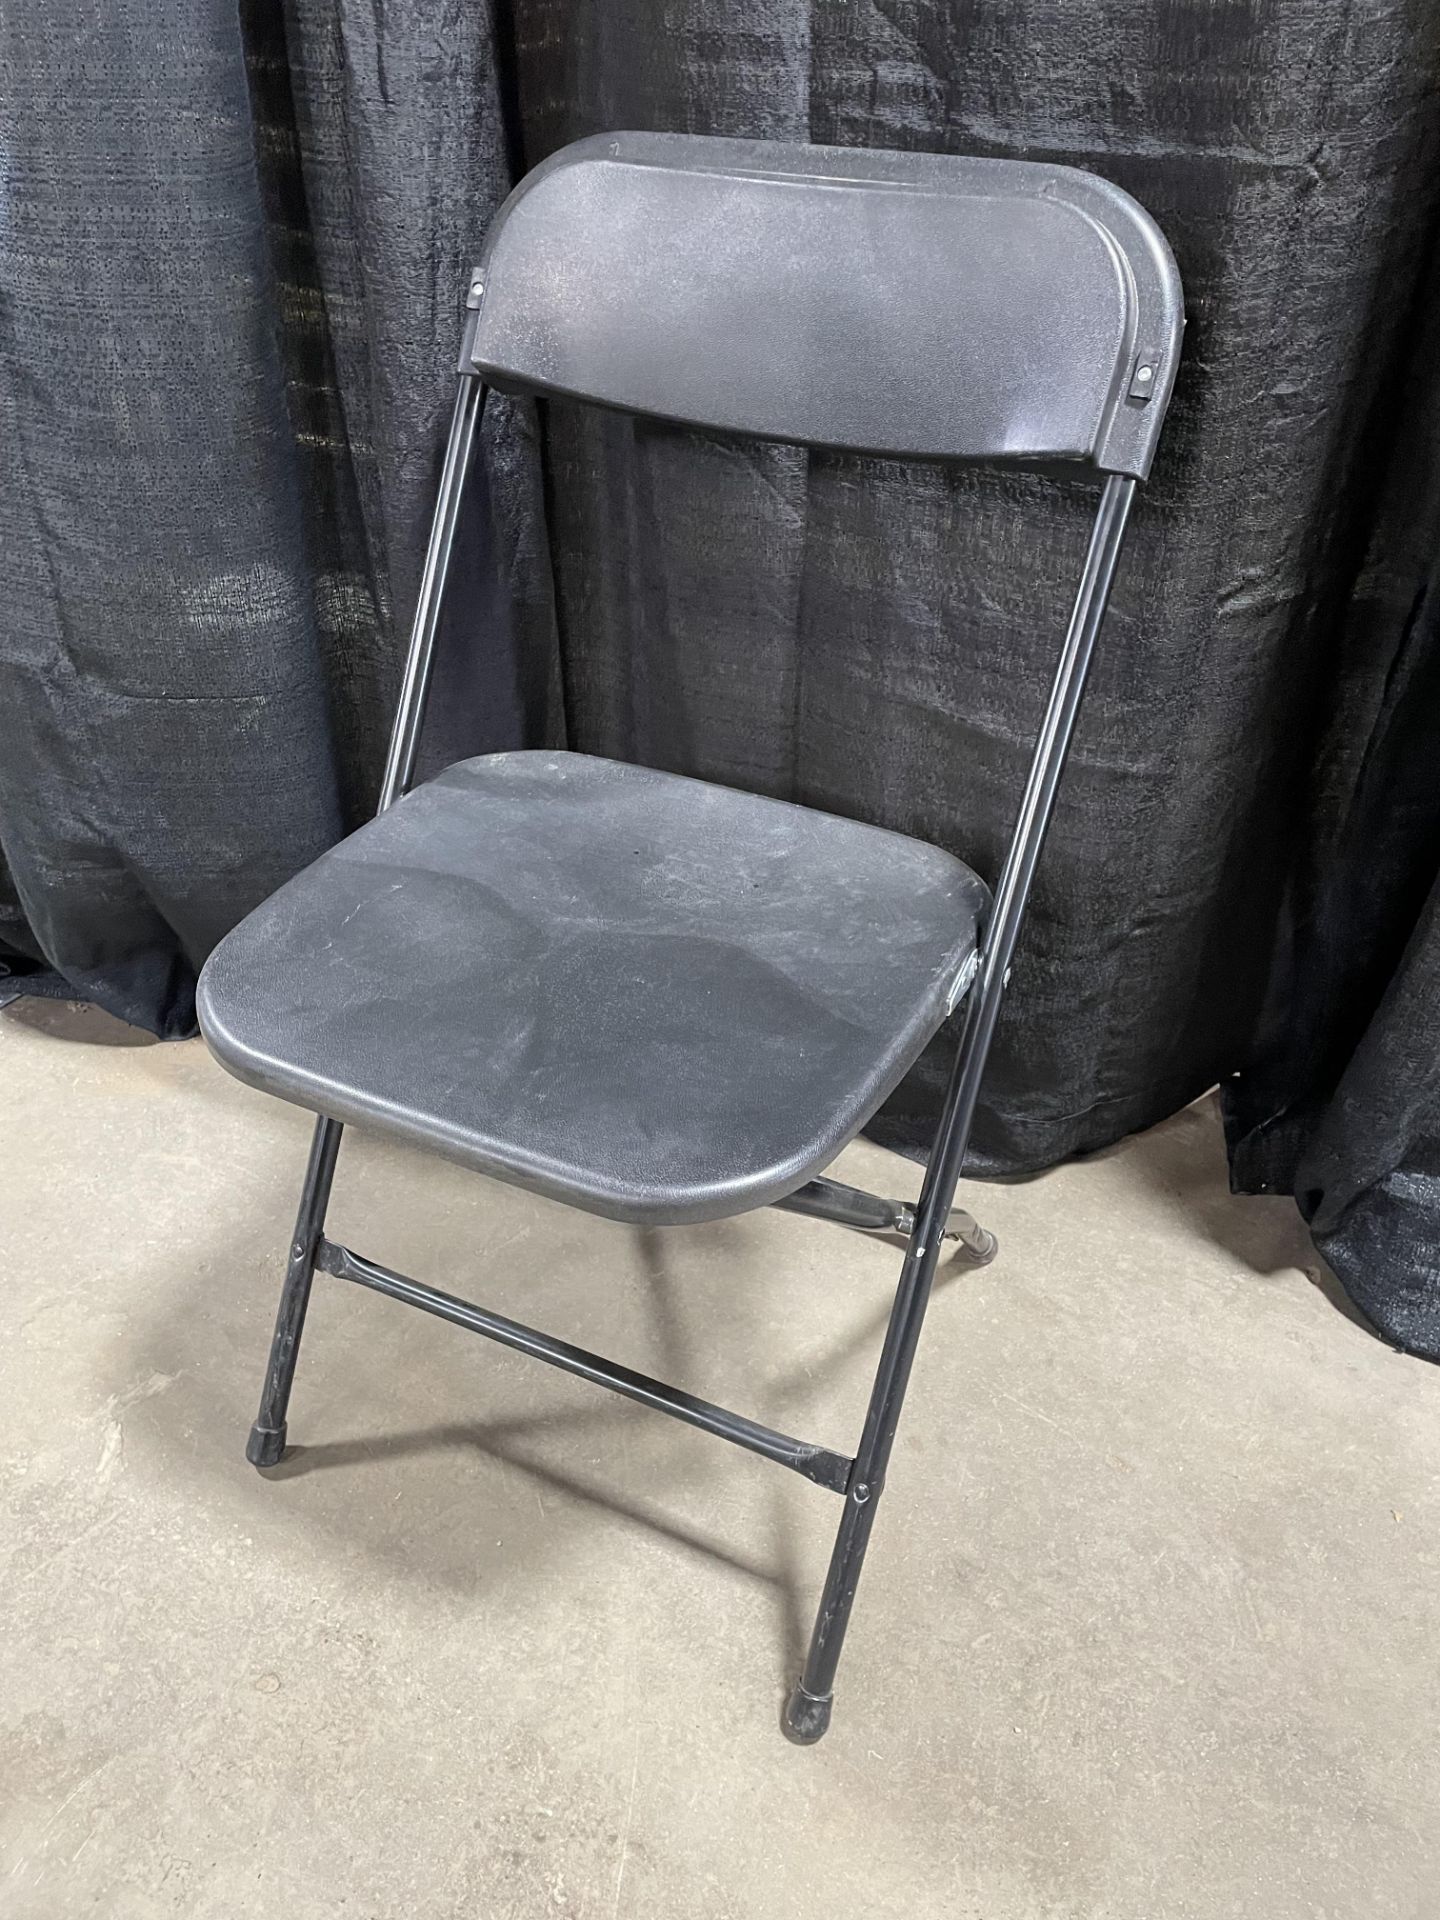 *Located in Shreveport, LA Black Folding Chairs, festival grade